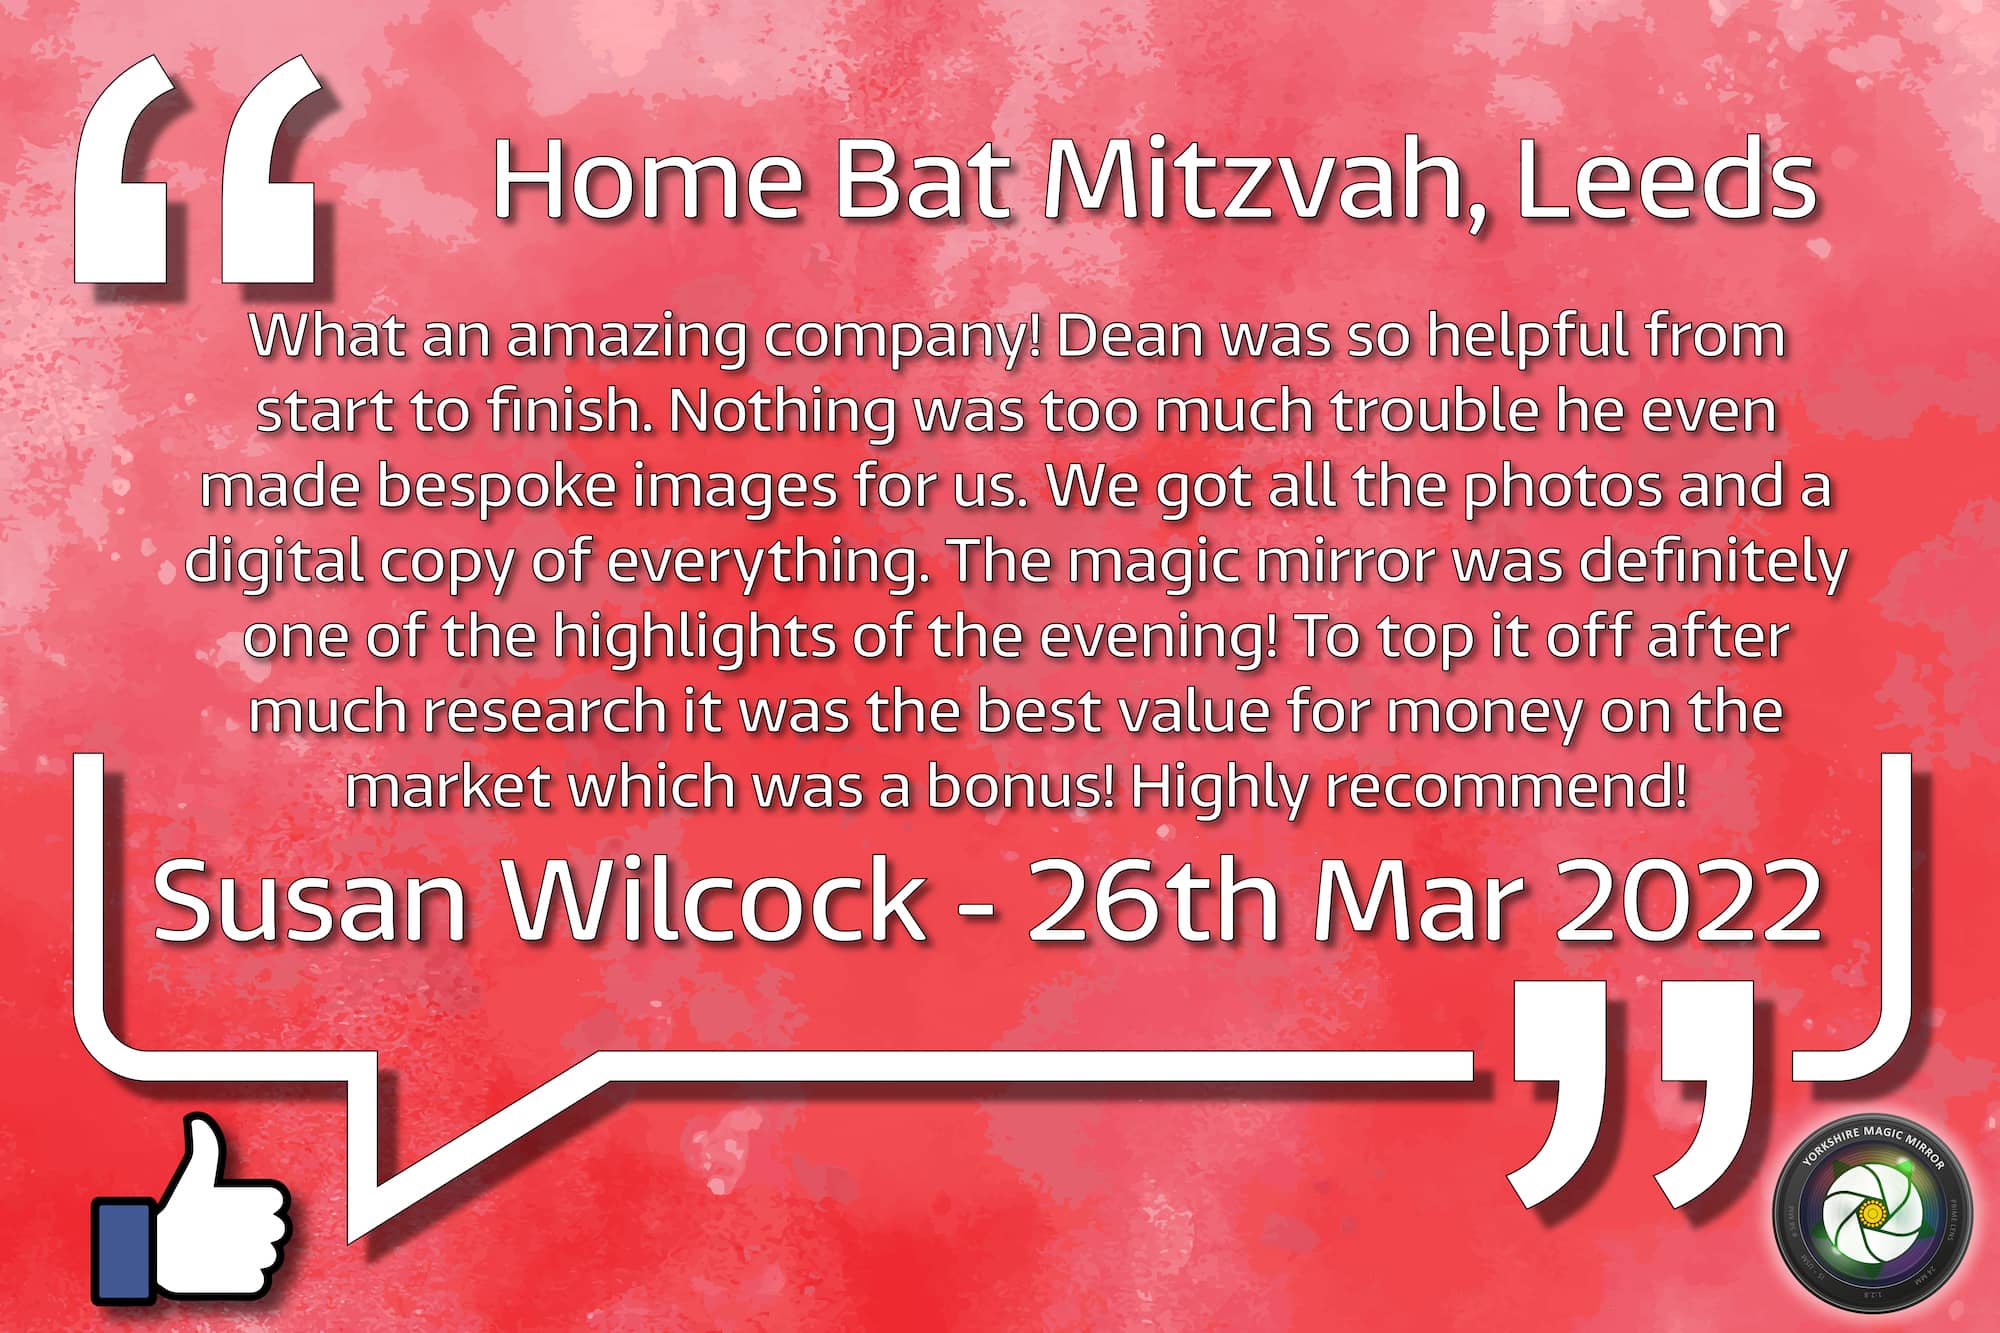 Home Party Leeds Susan Wilcock Bat Mitzvah 2022